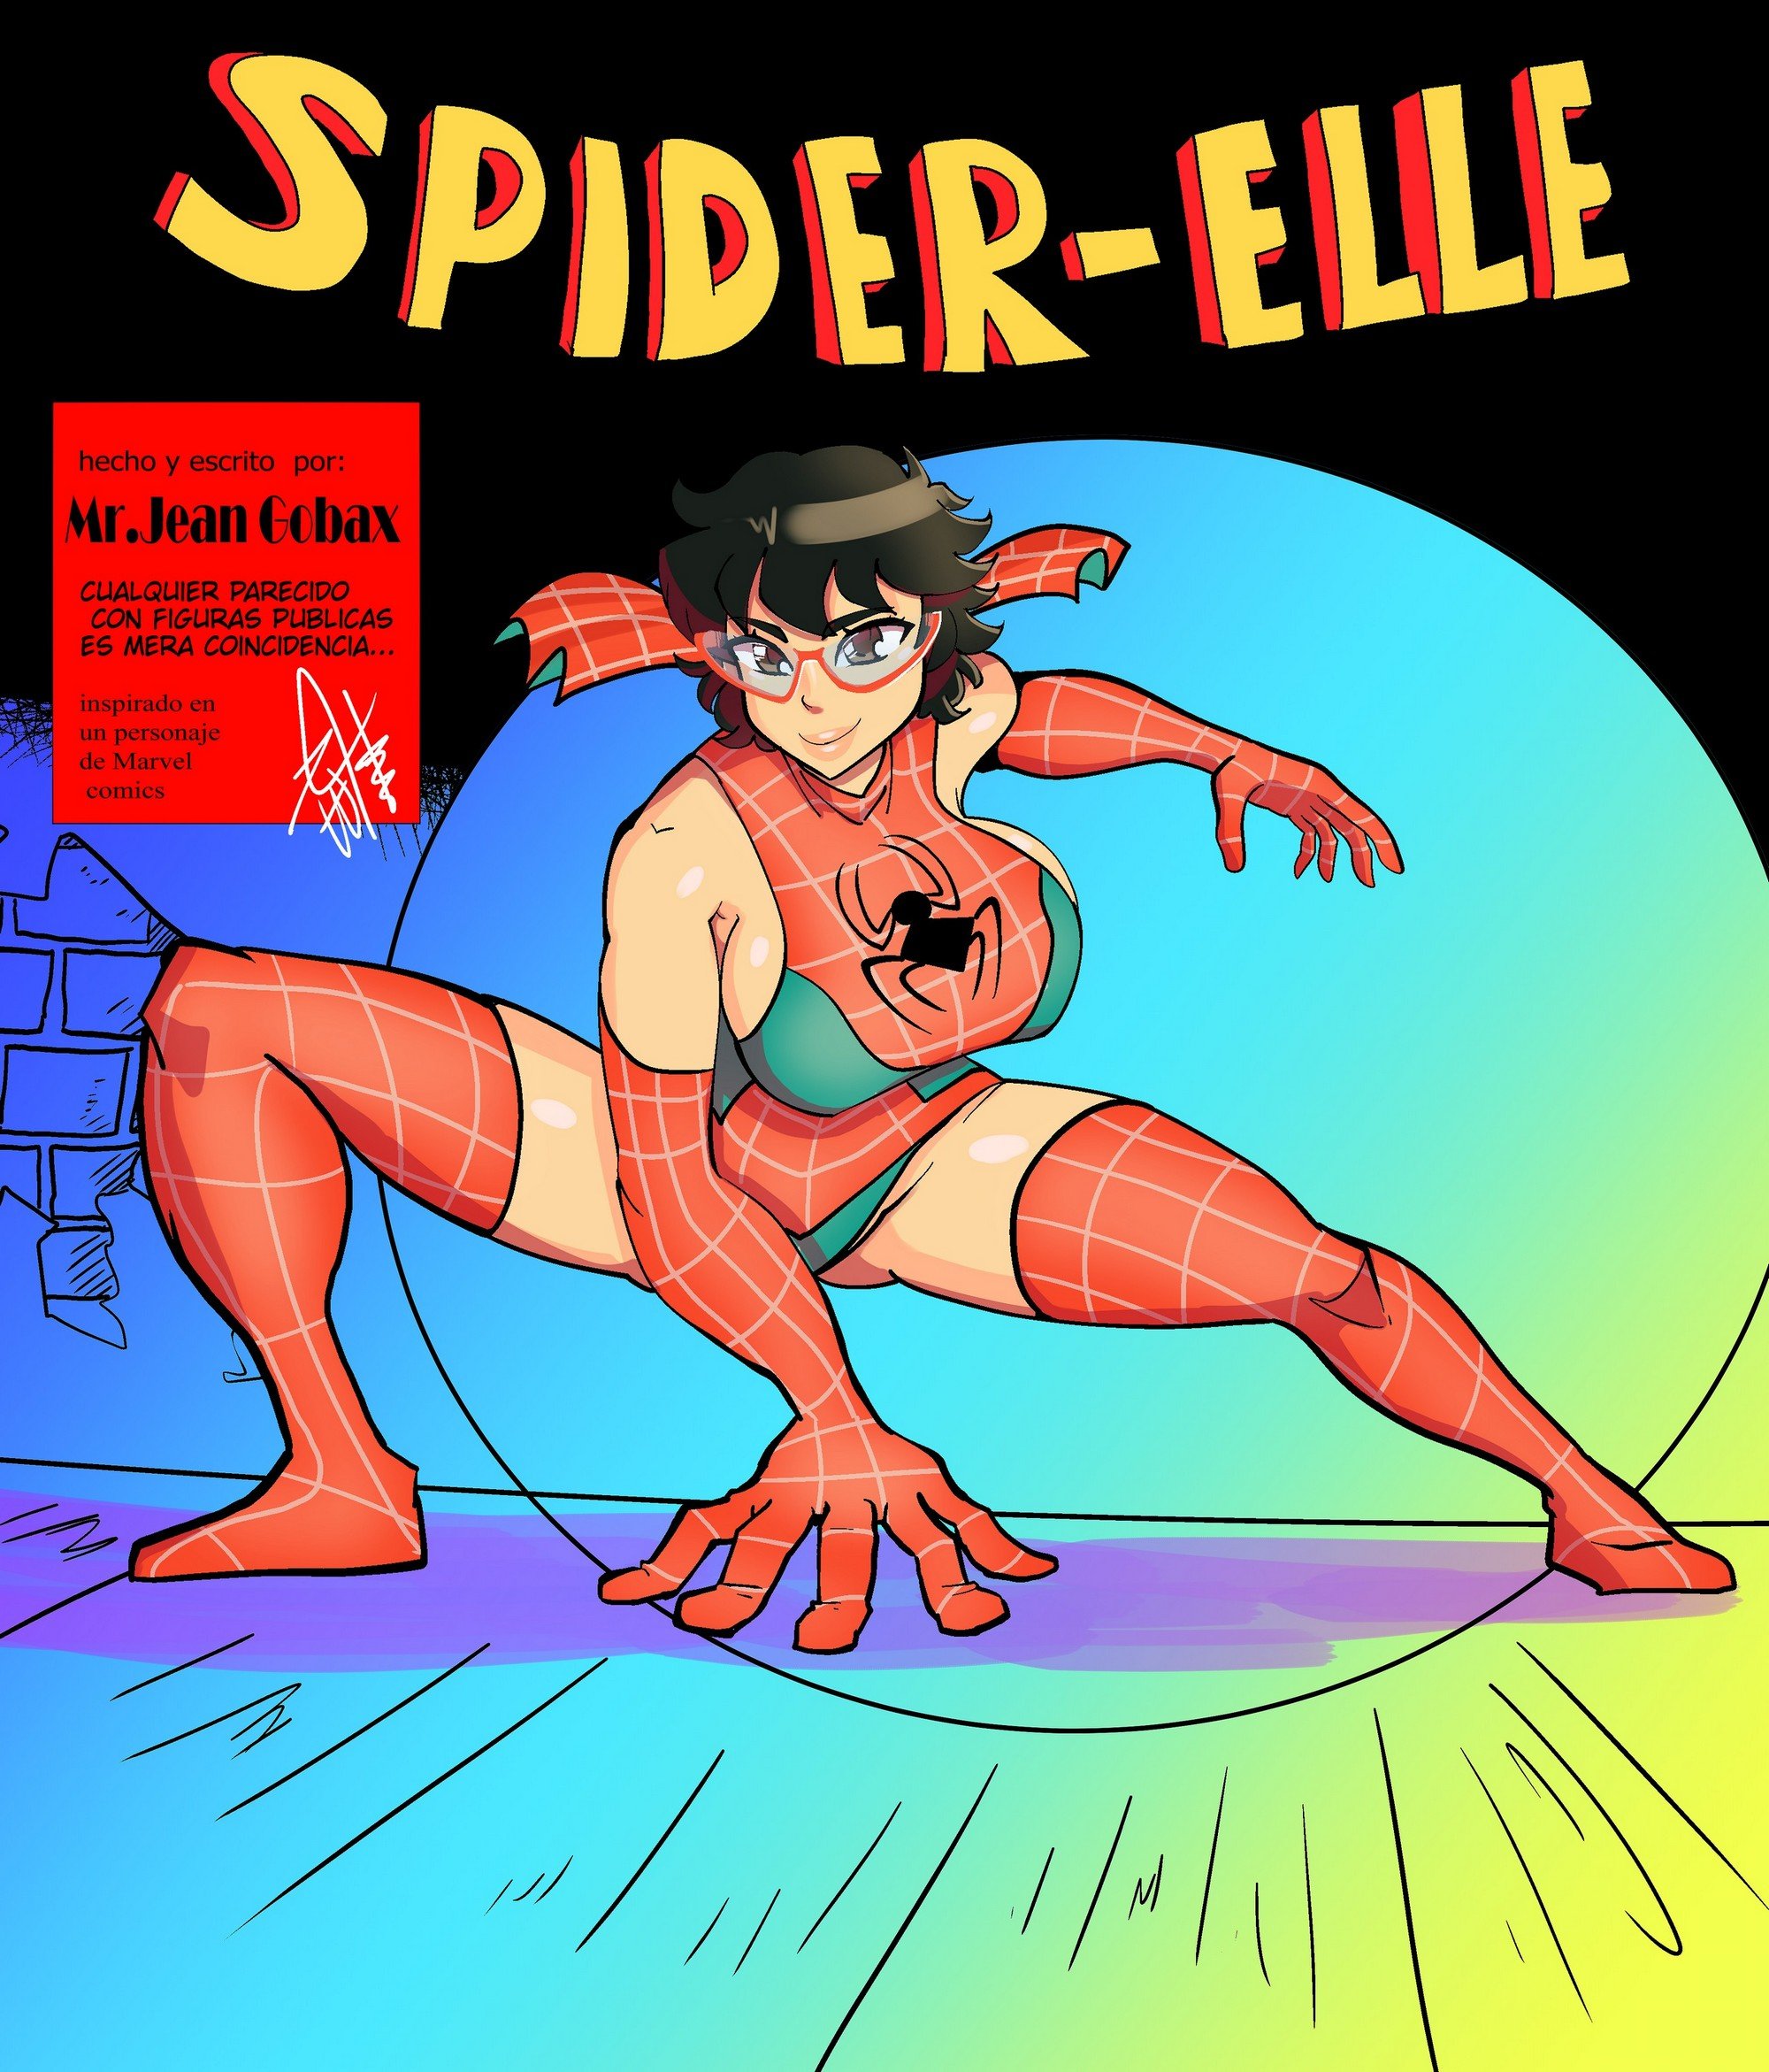 Spider-Elle comic Mr. Jean Gobax Spiderman porno